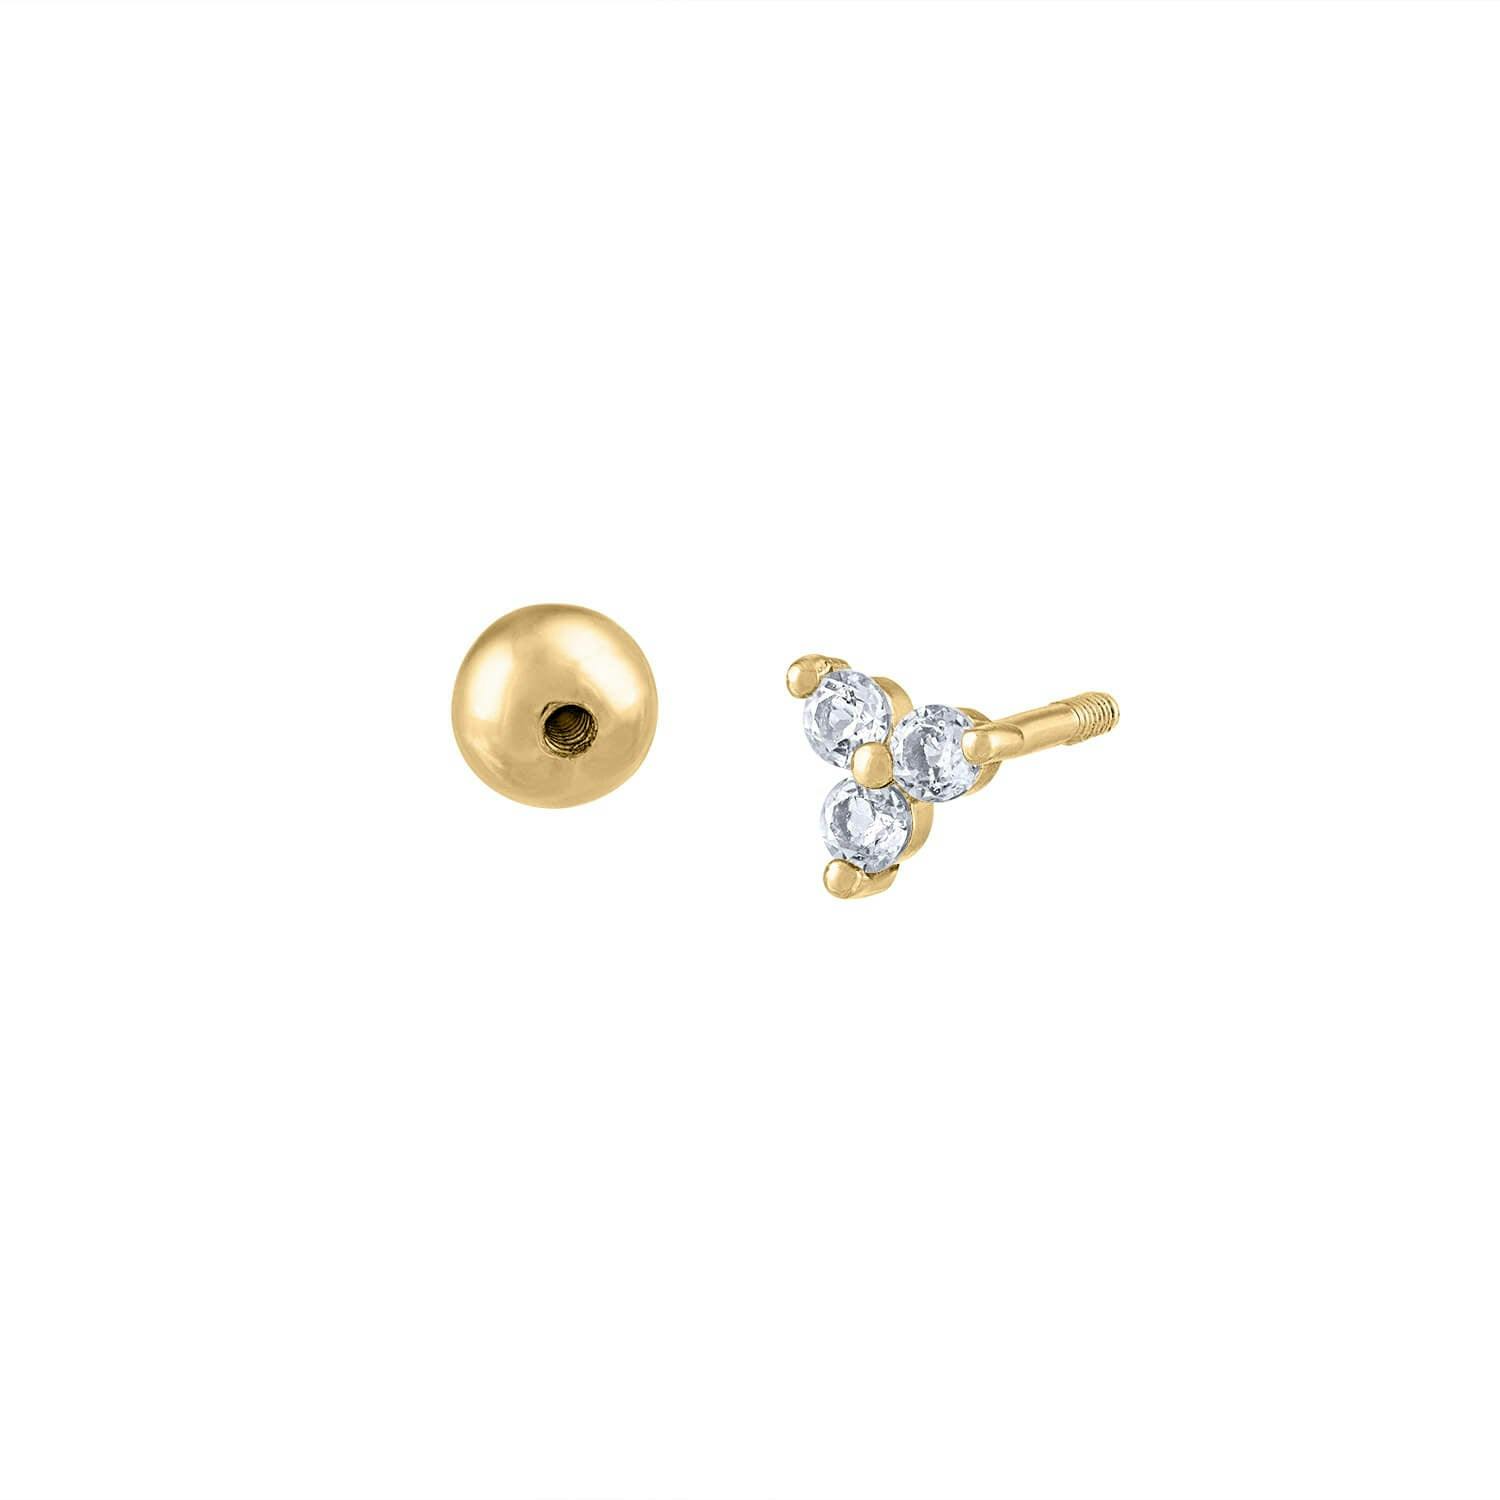 Crystal Trinity Ball Back Earrings in 14k Gold